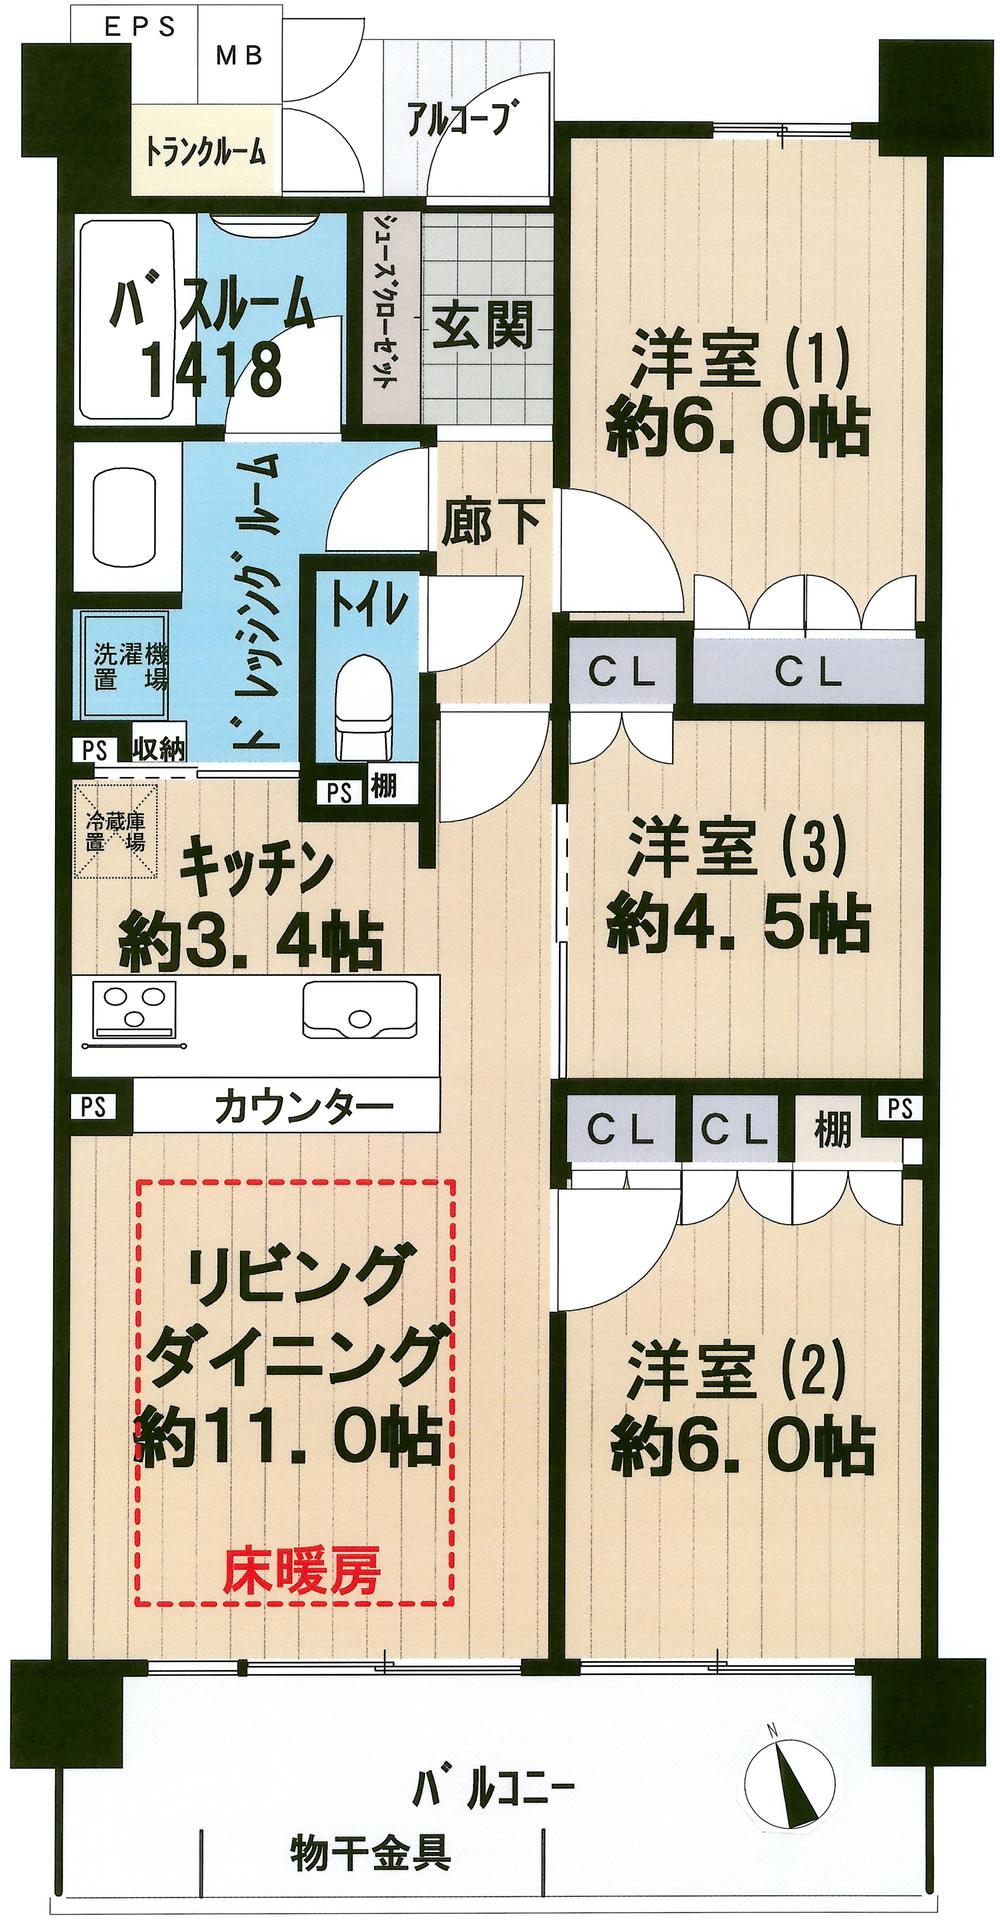 Floor plan. 3LDK, Price 21.6 million yen, Footprint 68.3 sq m , Balcony area 11.34 sq m